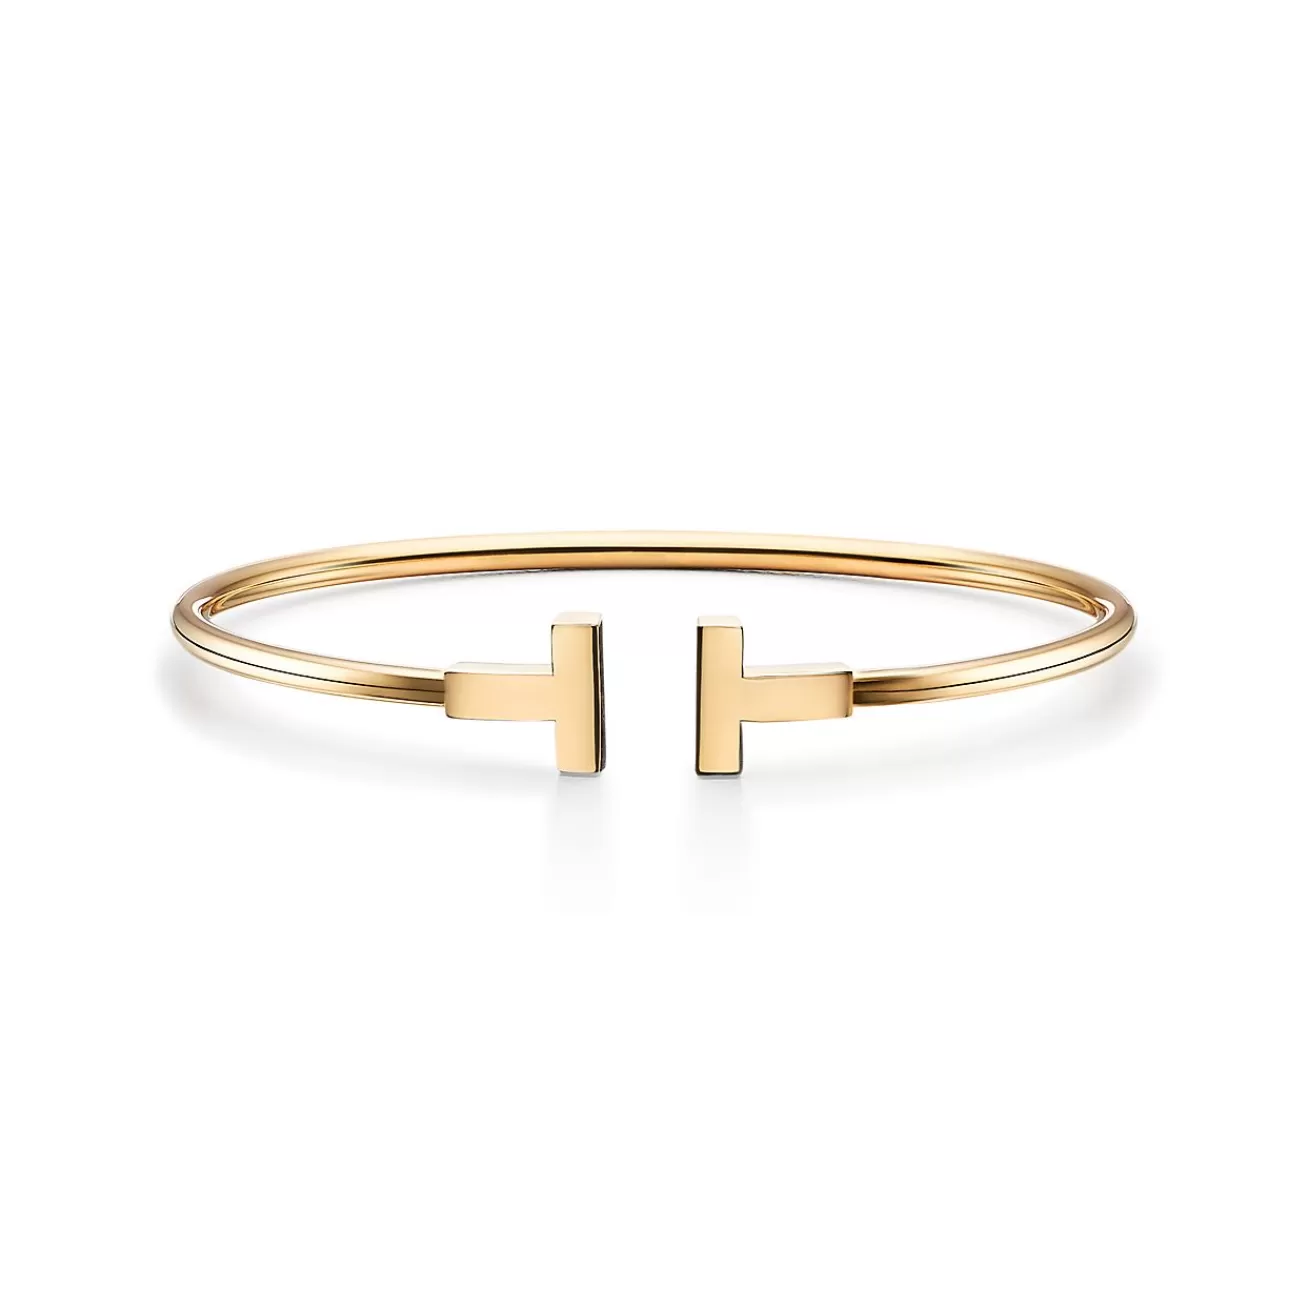 Tiffany & Co. Tiffany T wire bracelet in 18k gold, medium. | ^ Bracelets | Gifts for Her